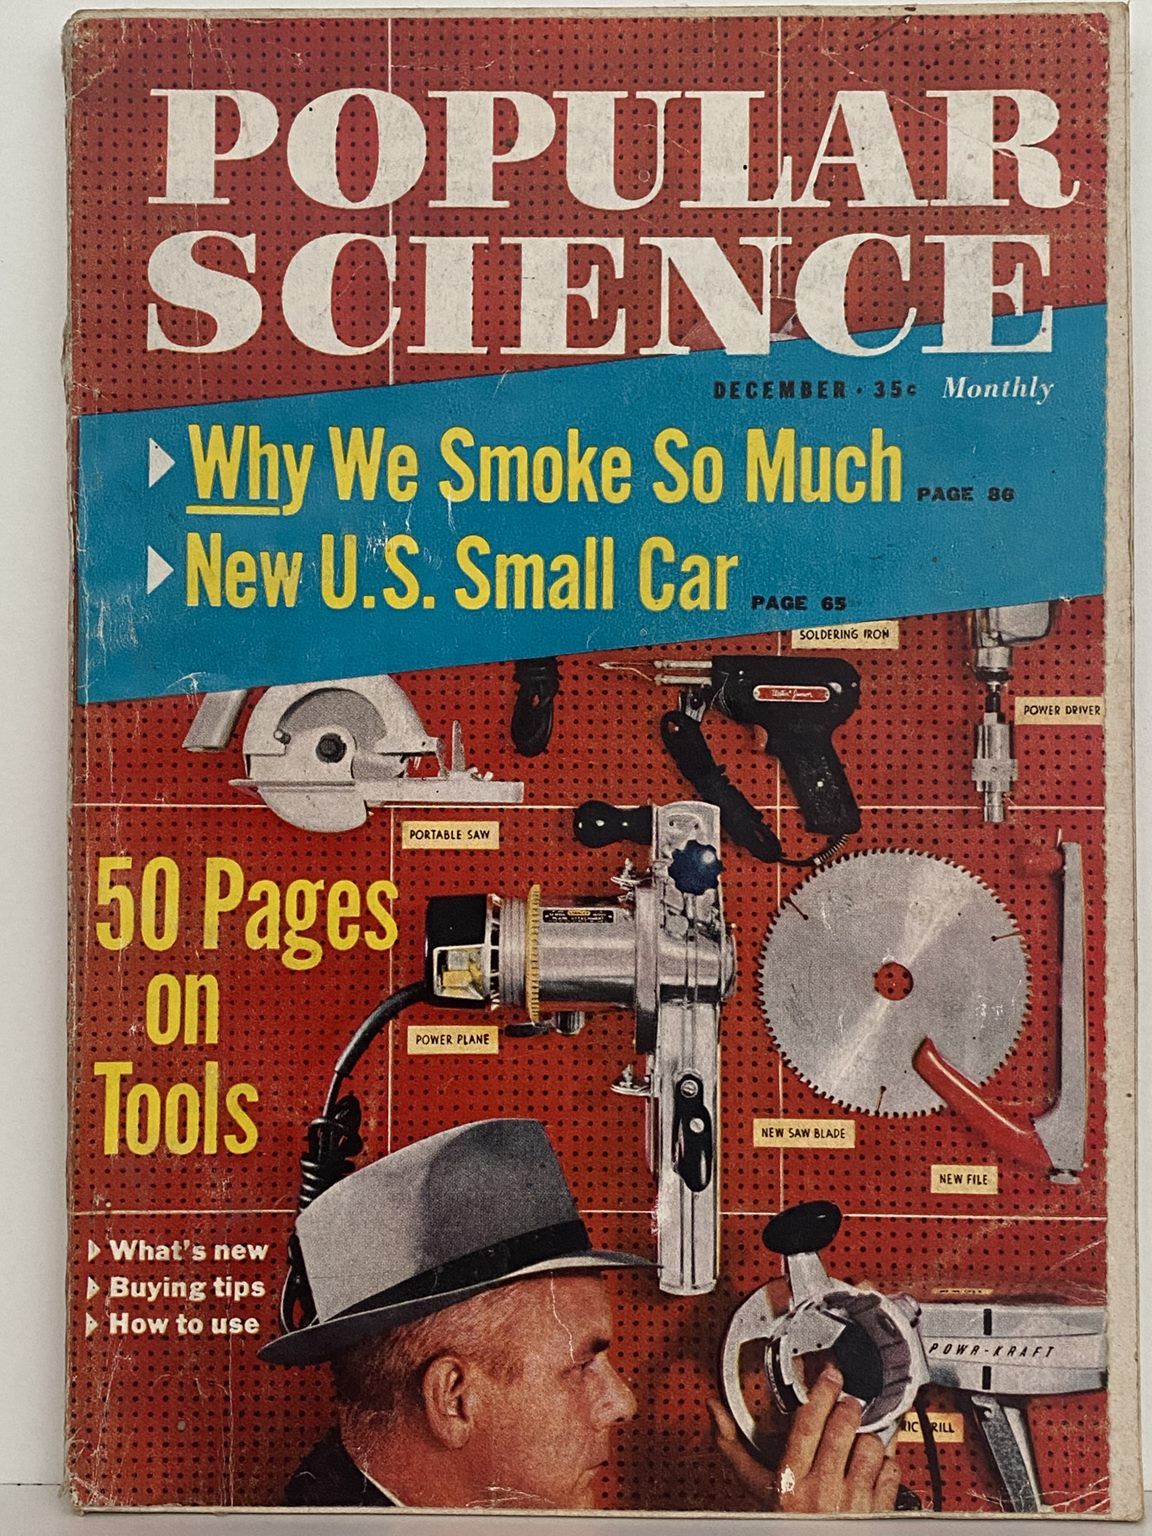 VINTAGE MAGAZINE: Popular Science - December 1958